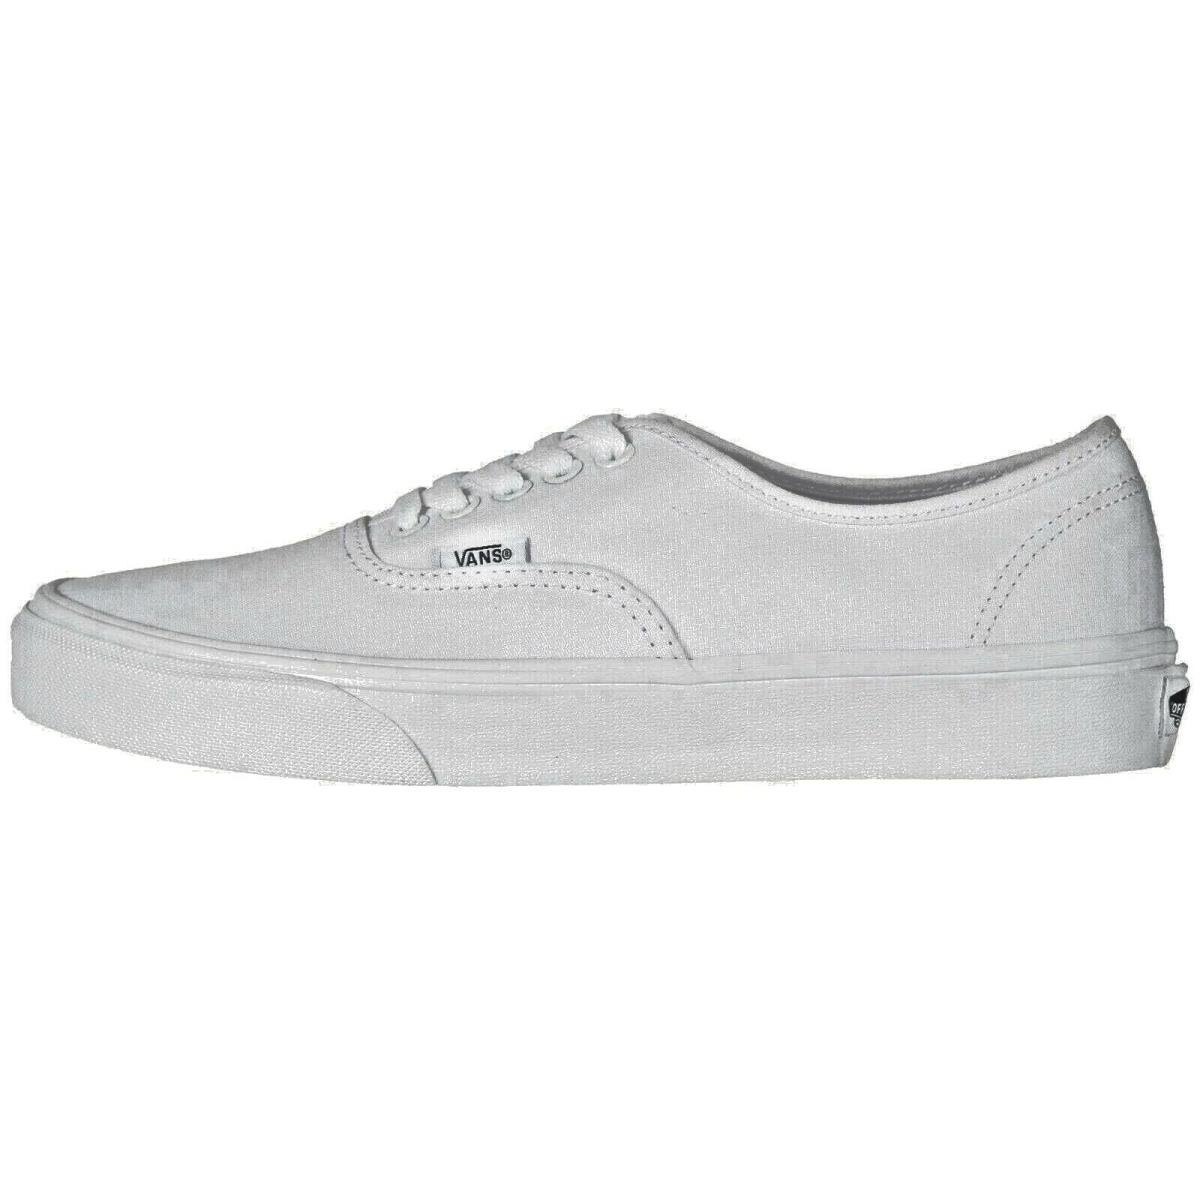 Vans Skate Shoes Adult Unisex True White VN000EE3W00 All Sizes - White